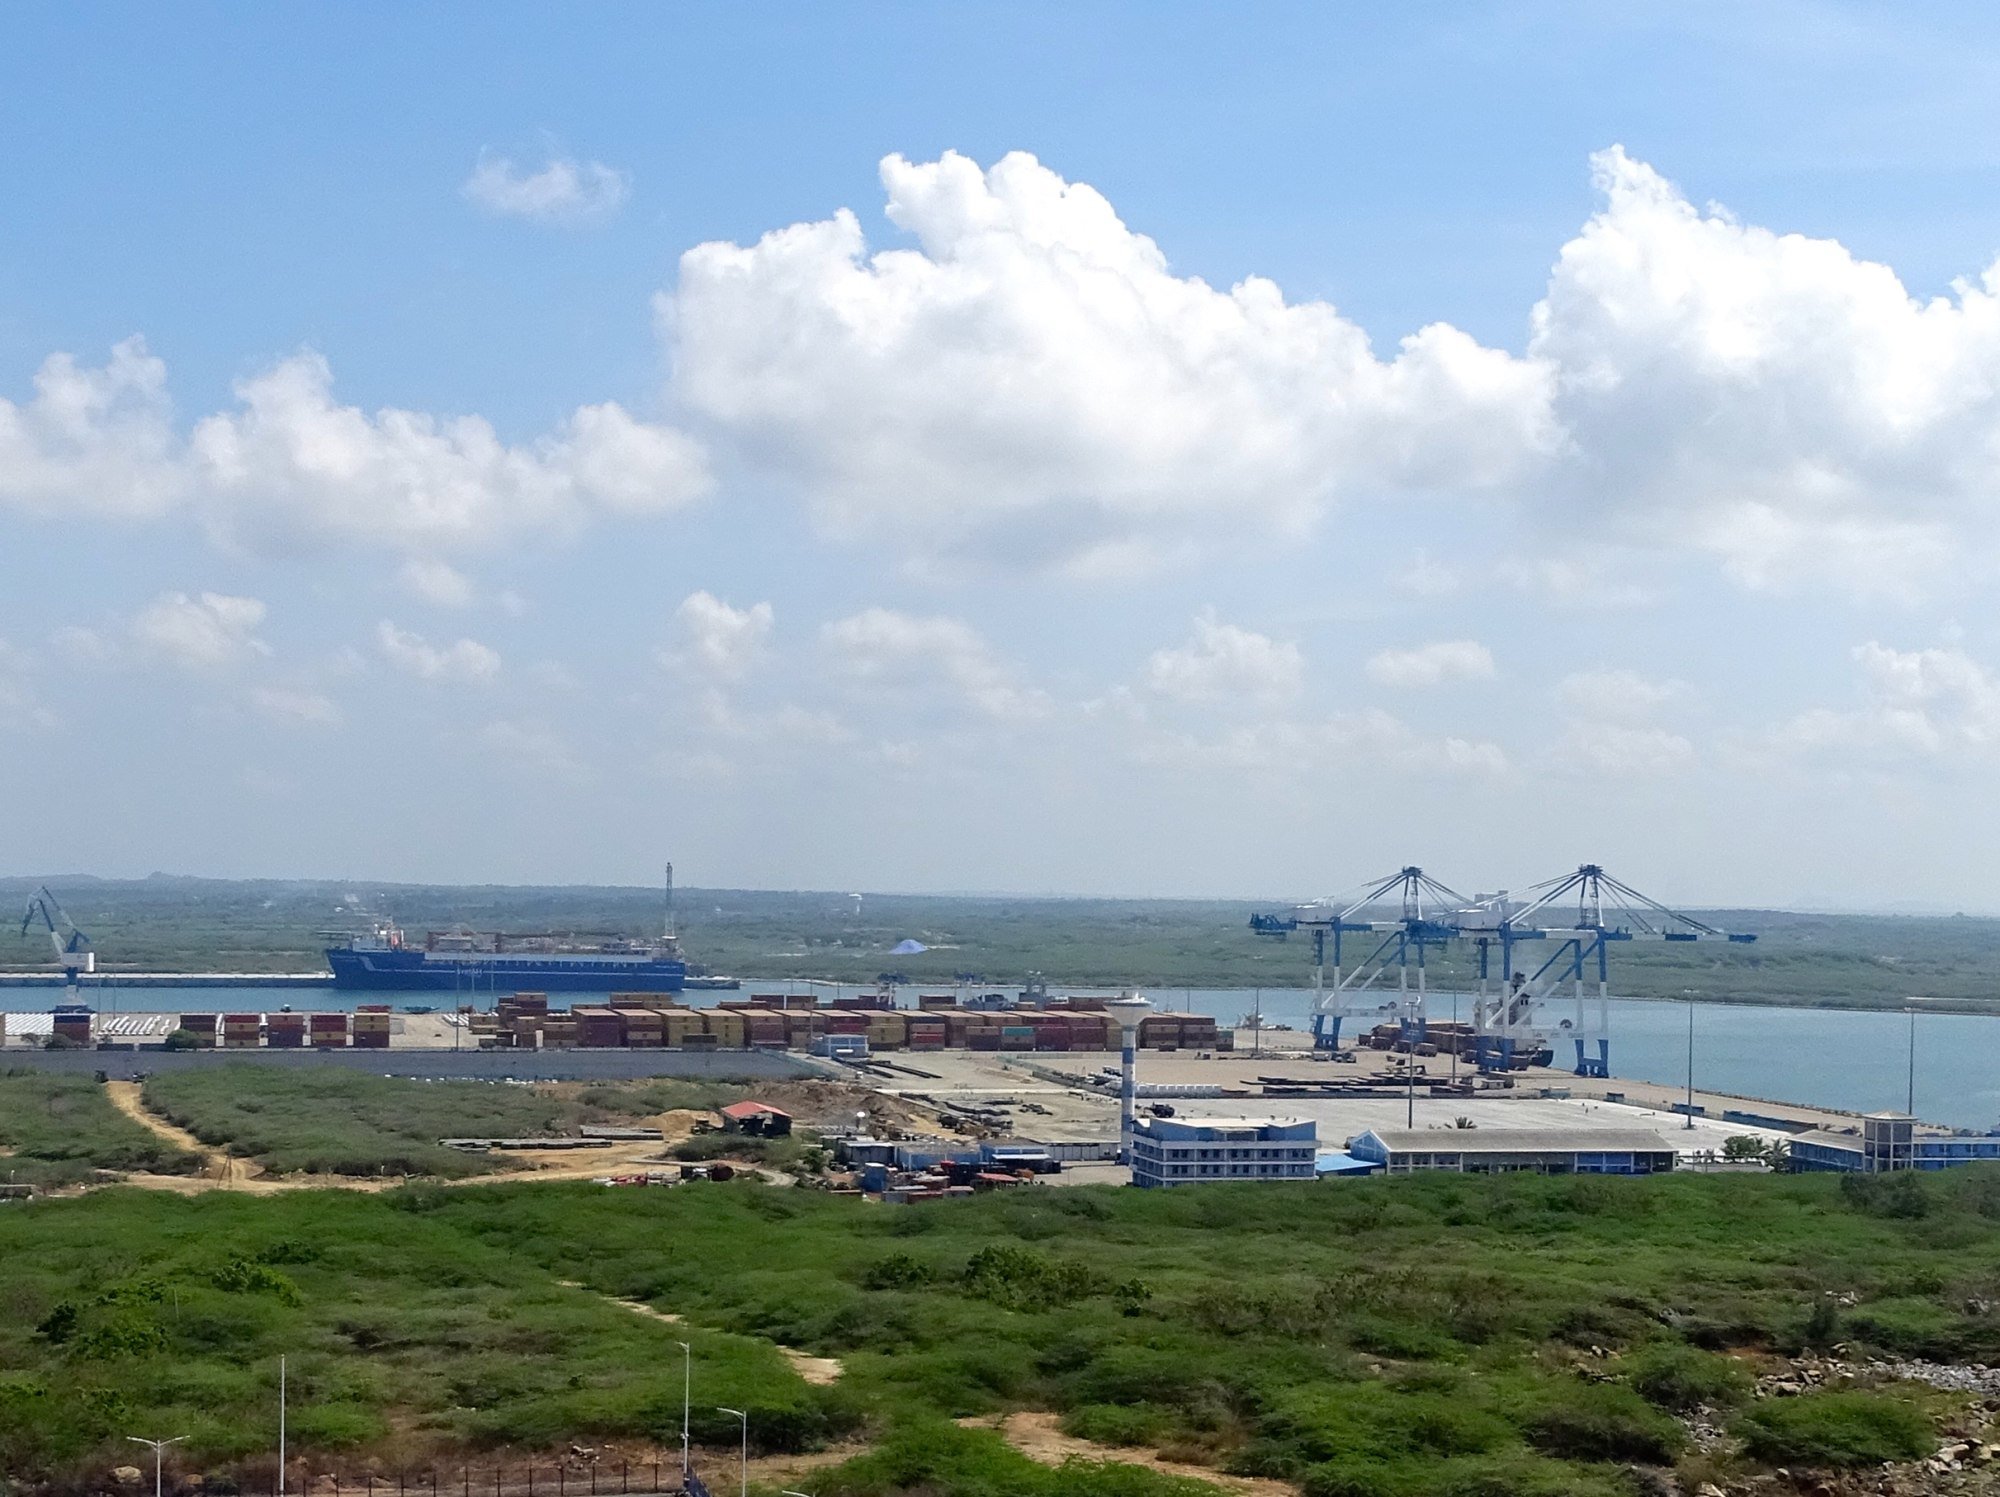 A Chinese debt trap? Sri Lanka’s Hambantota port set to debunk narrative with its success